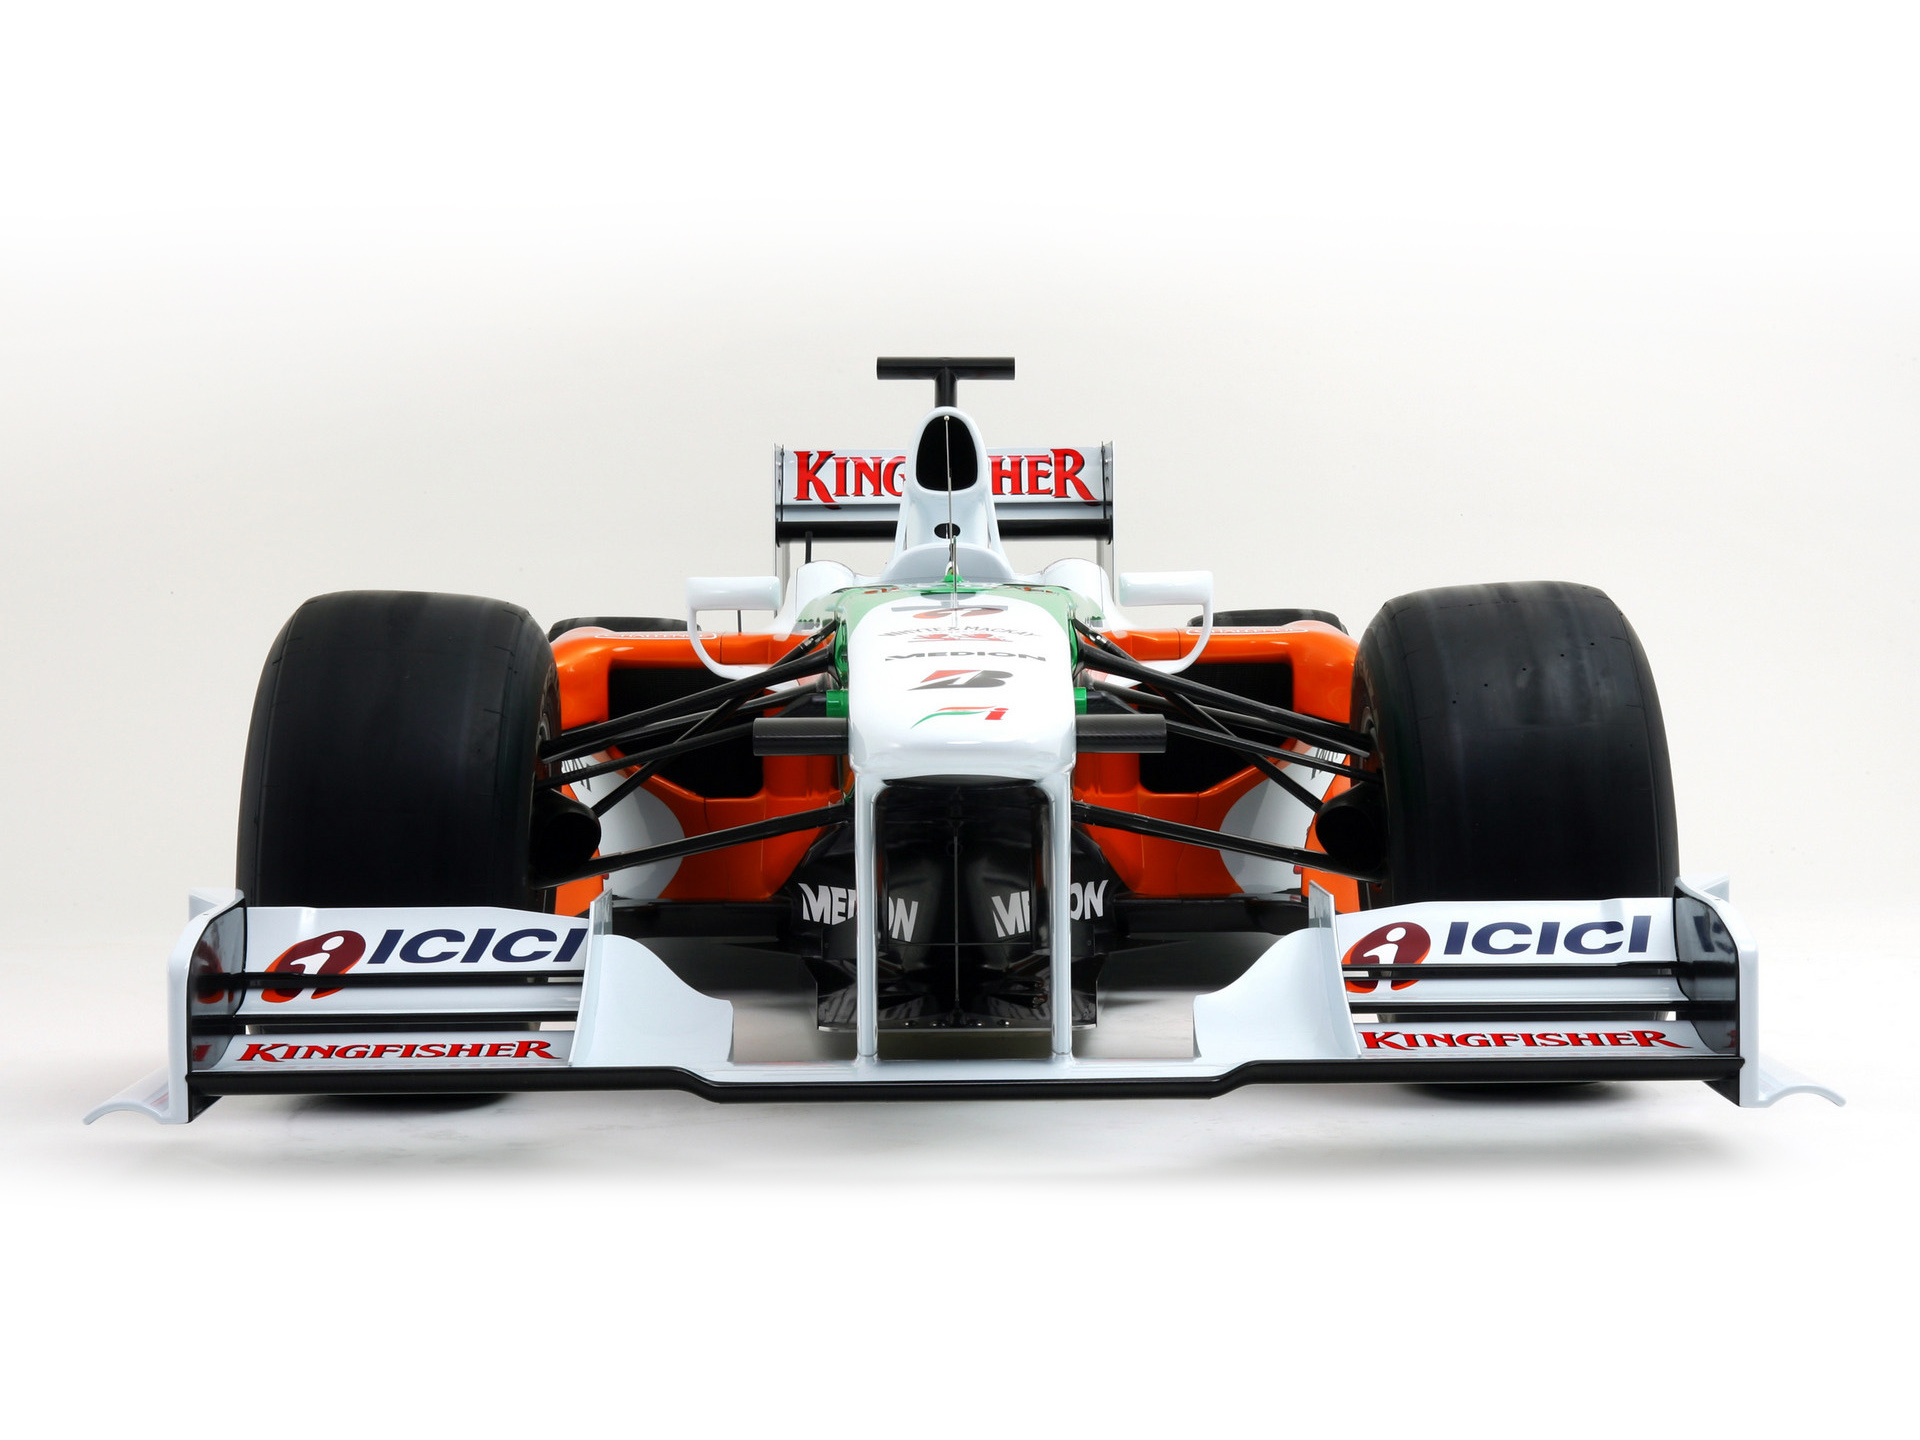 Car Force India Formula 1 1920x1440